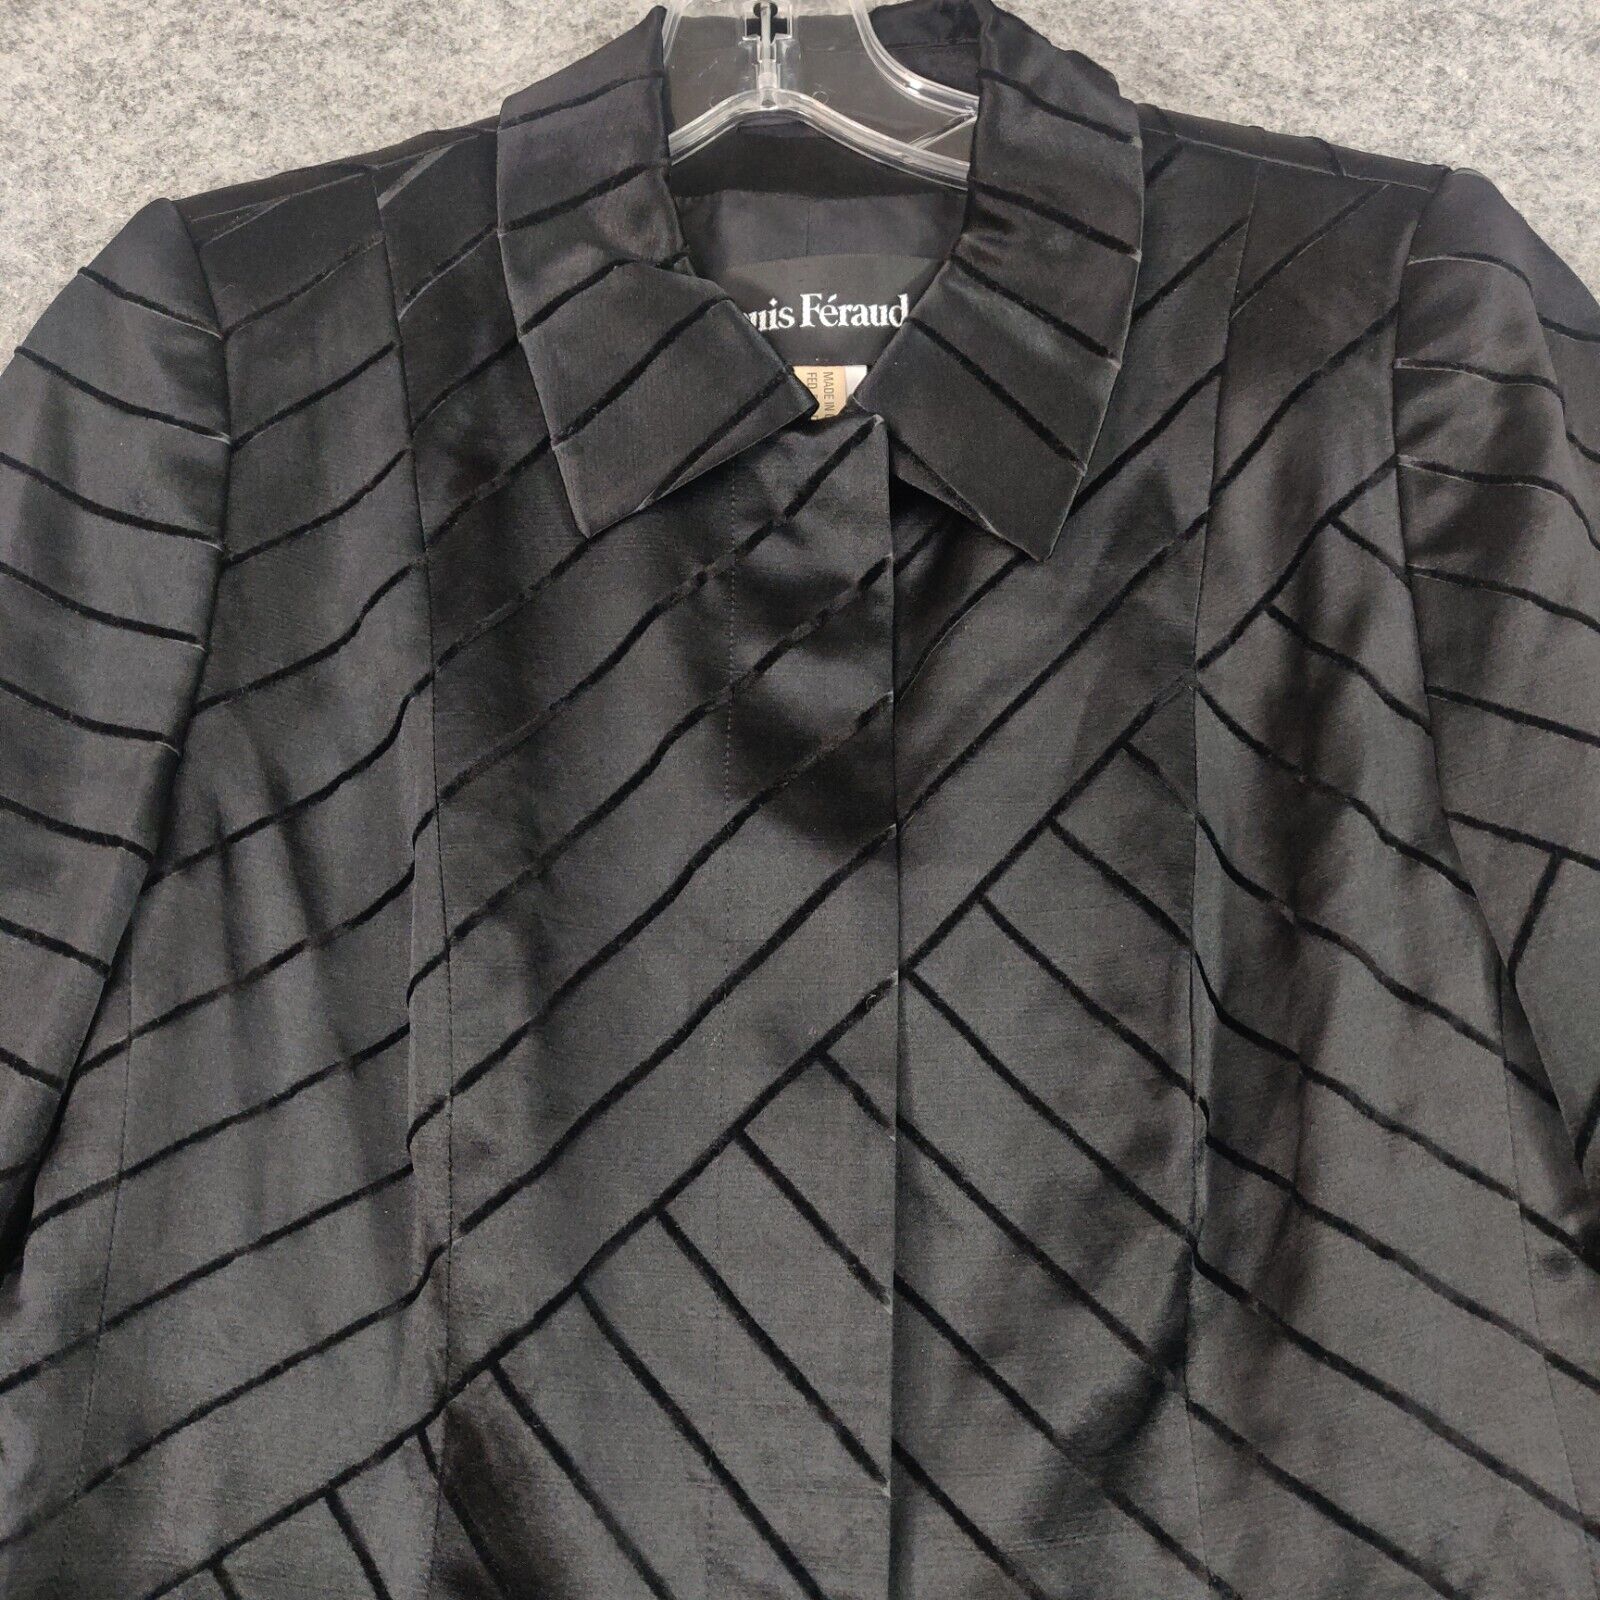 Vintage Louis Féraud GERMANY Top Size 8 Black Silk Blend Long Sleeve Button 80s